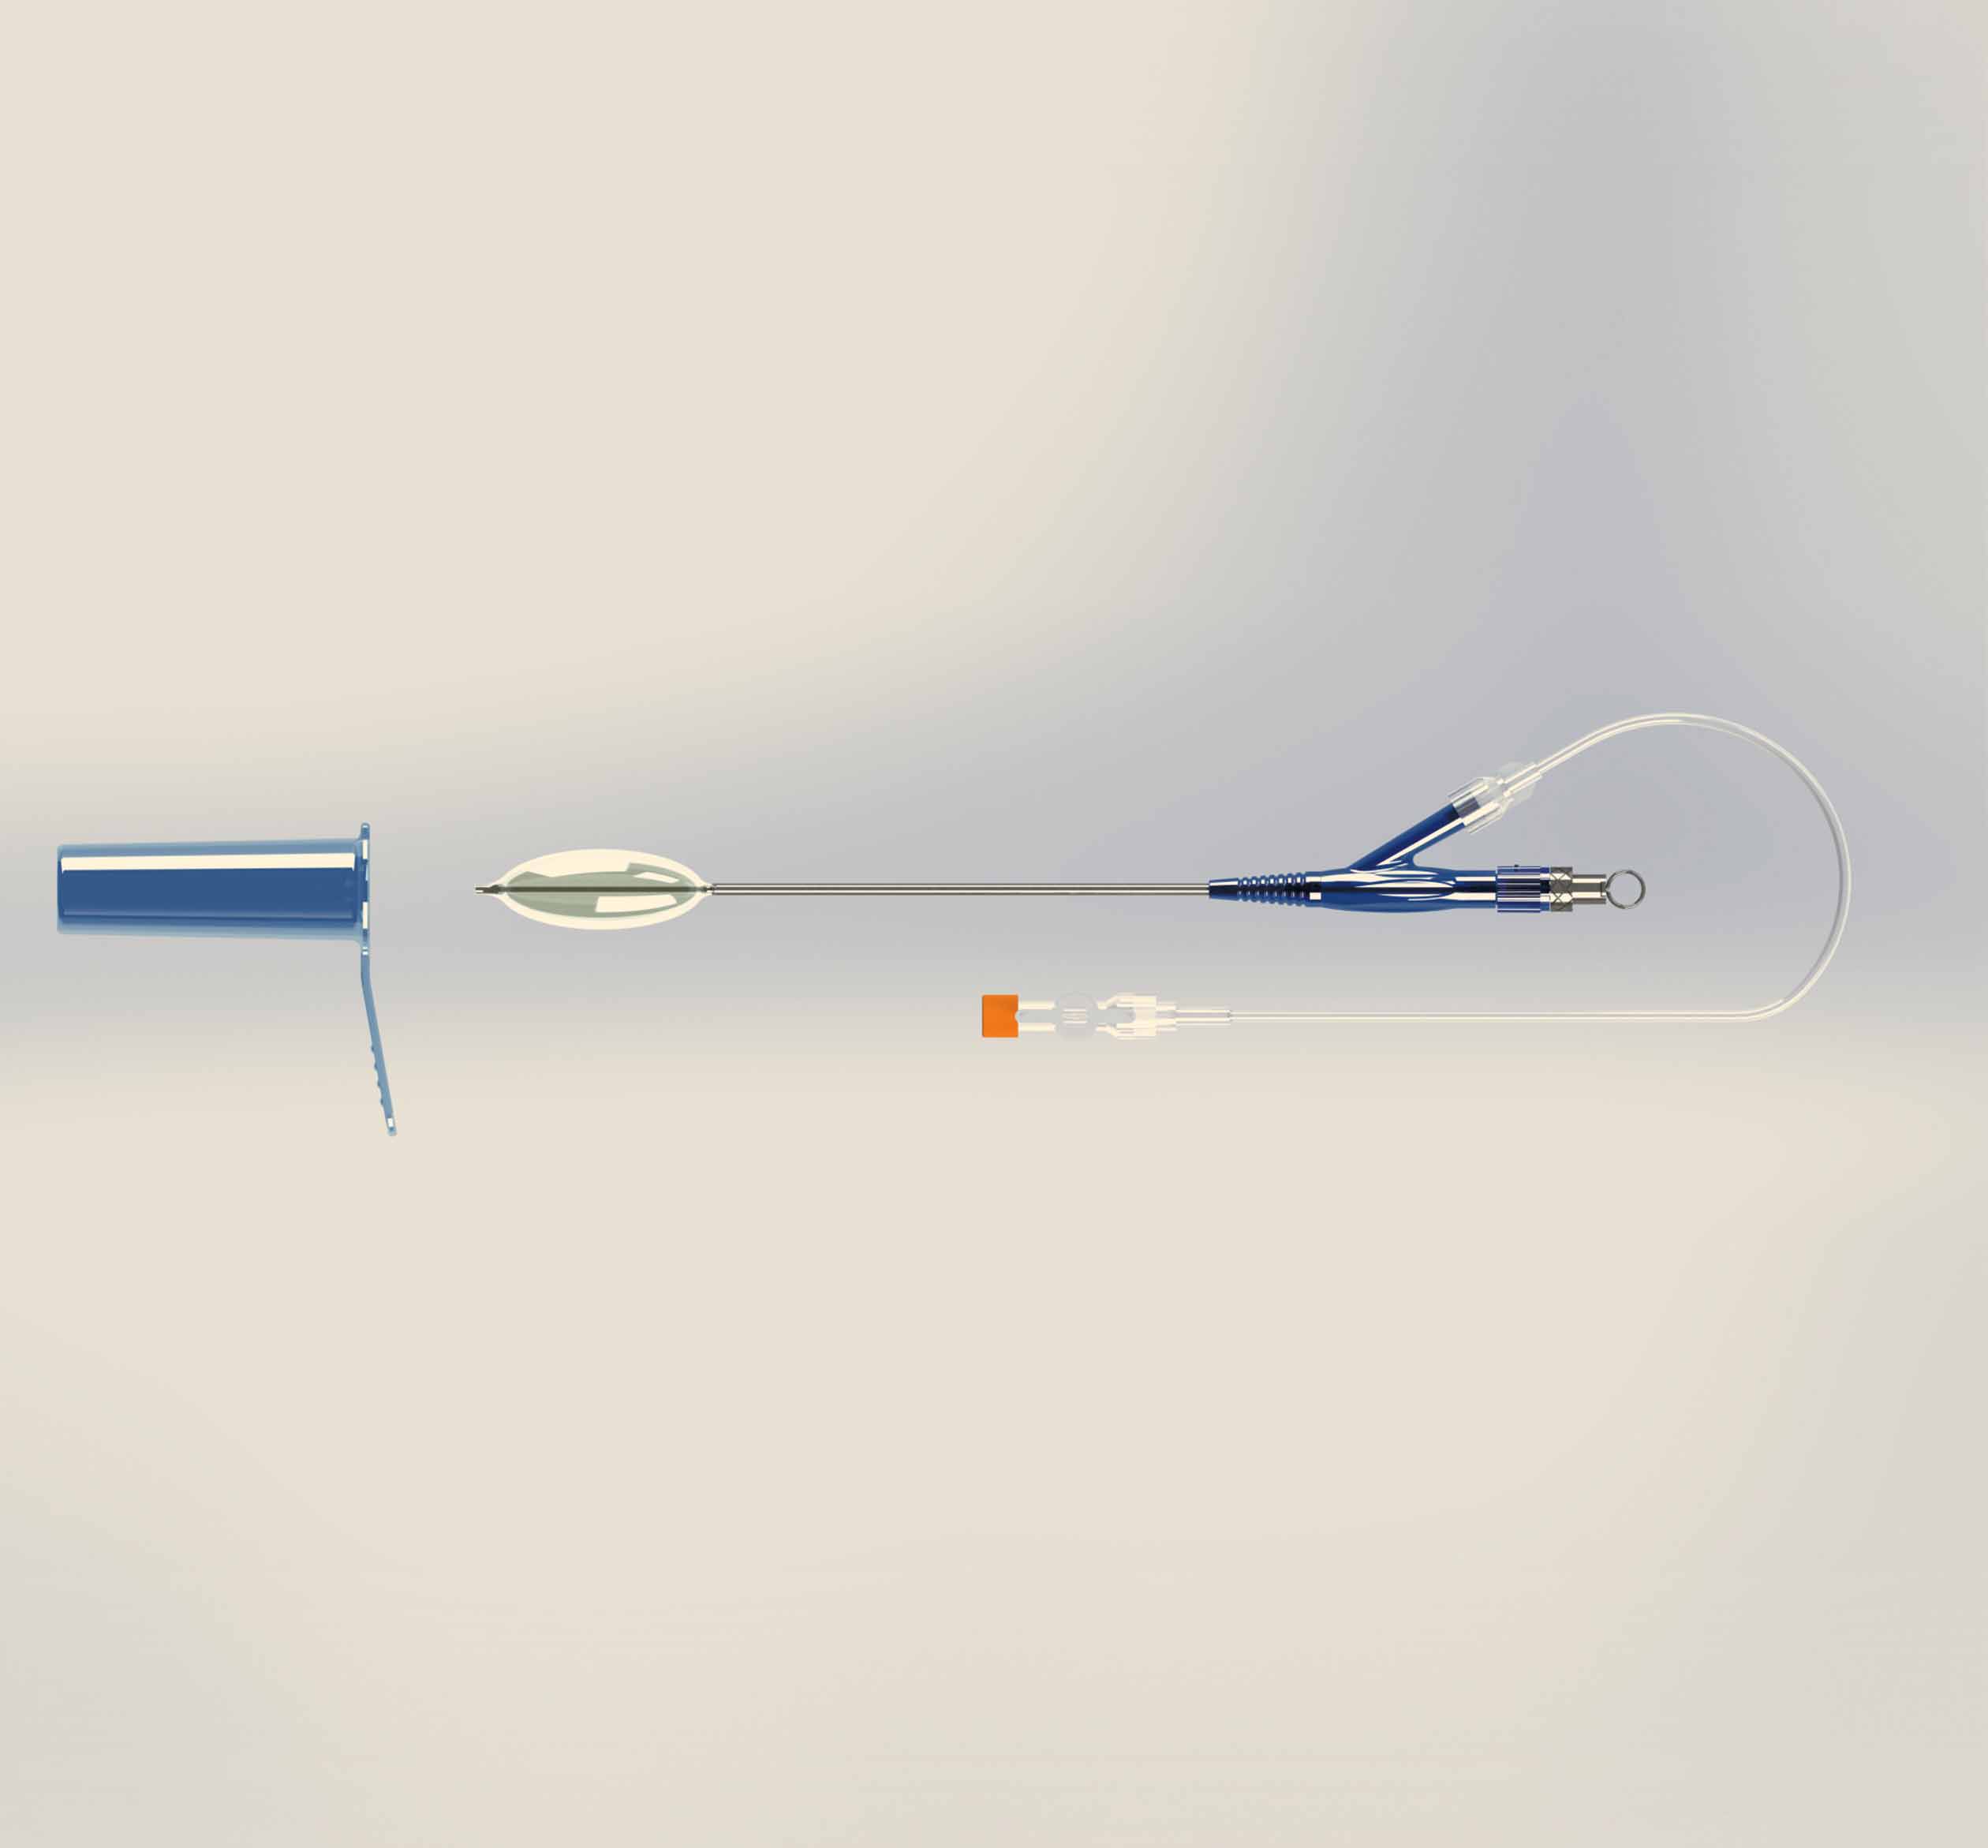 Disposable brain expansion balloon catheter kit - pre retraction balloon